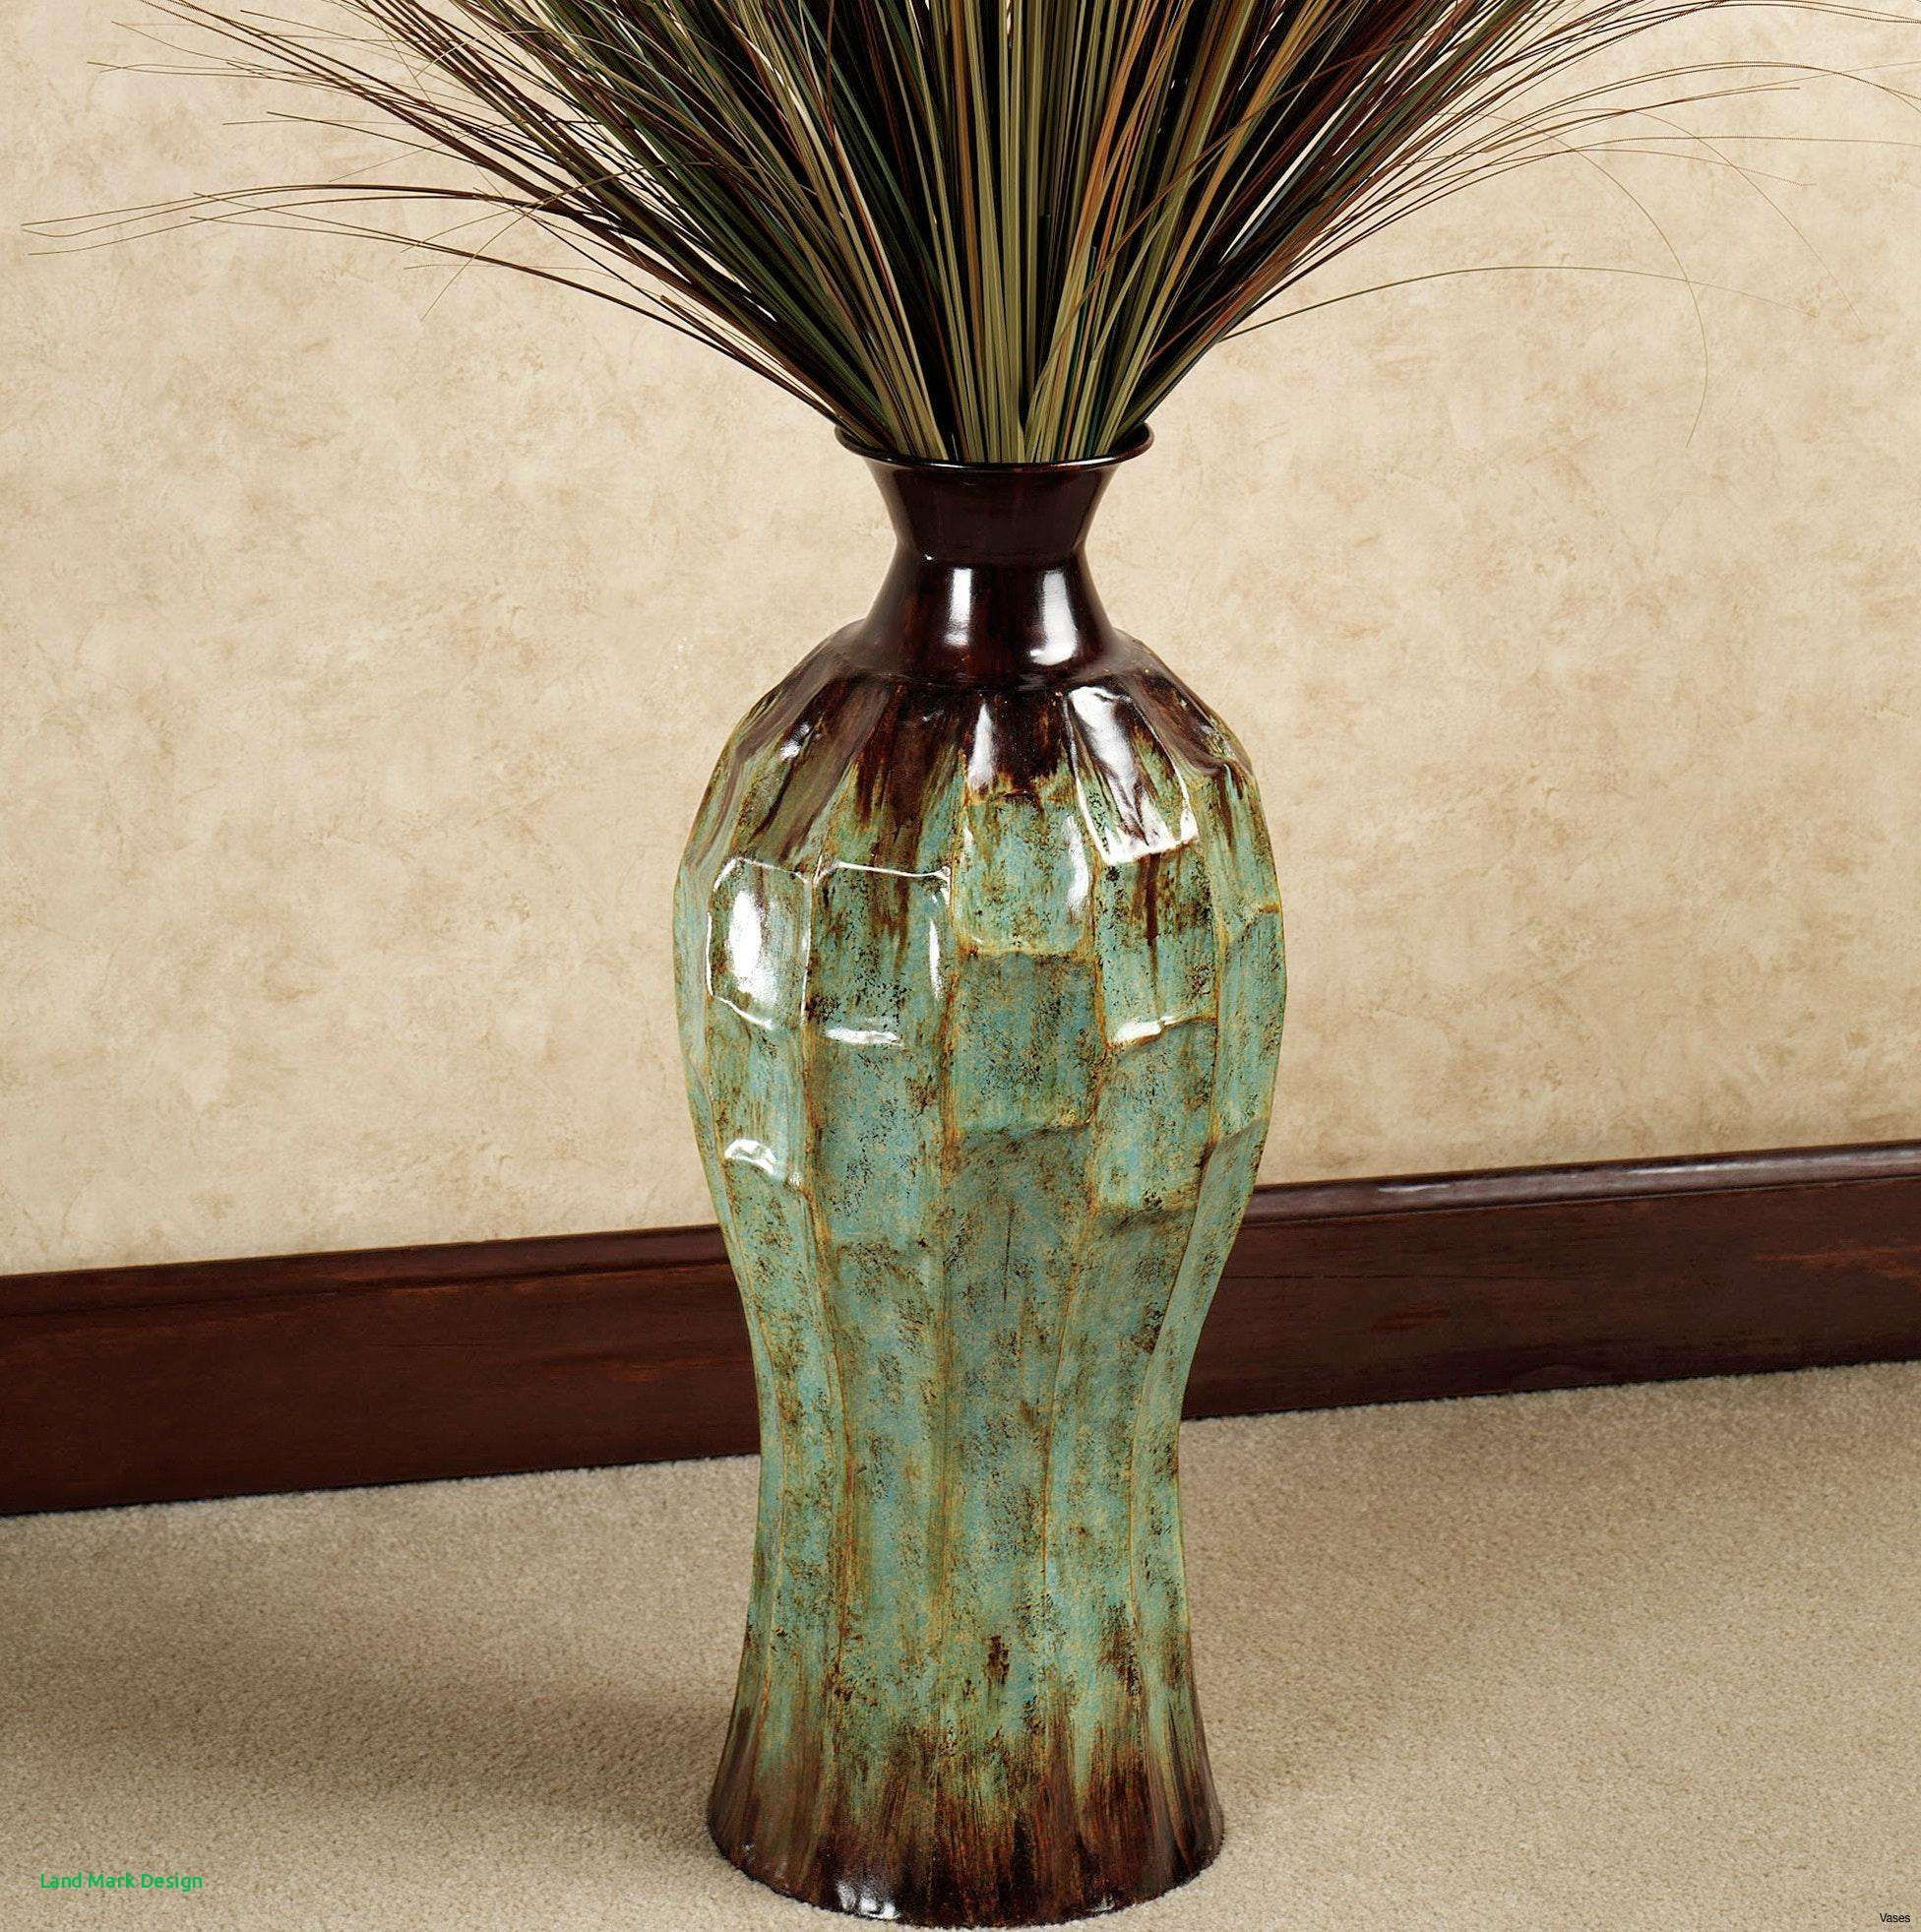 colored vase fillers of crystal vase fillers beautiful floor vase fillers the weekly world with regard to crystal vase fillers beautiful floor vase fillers